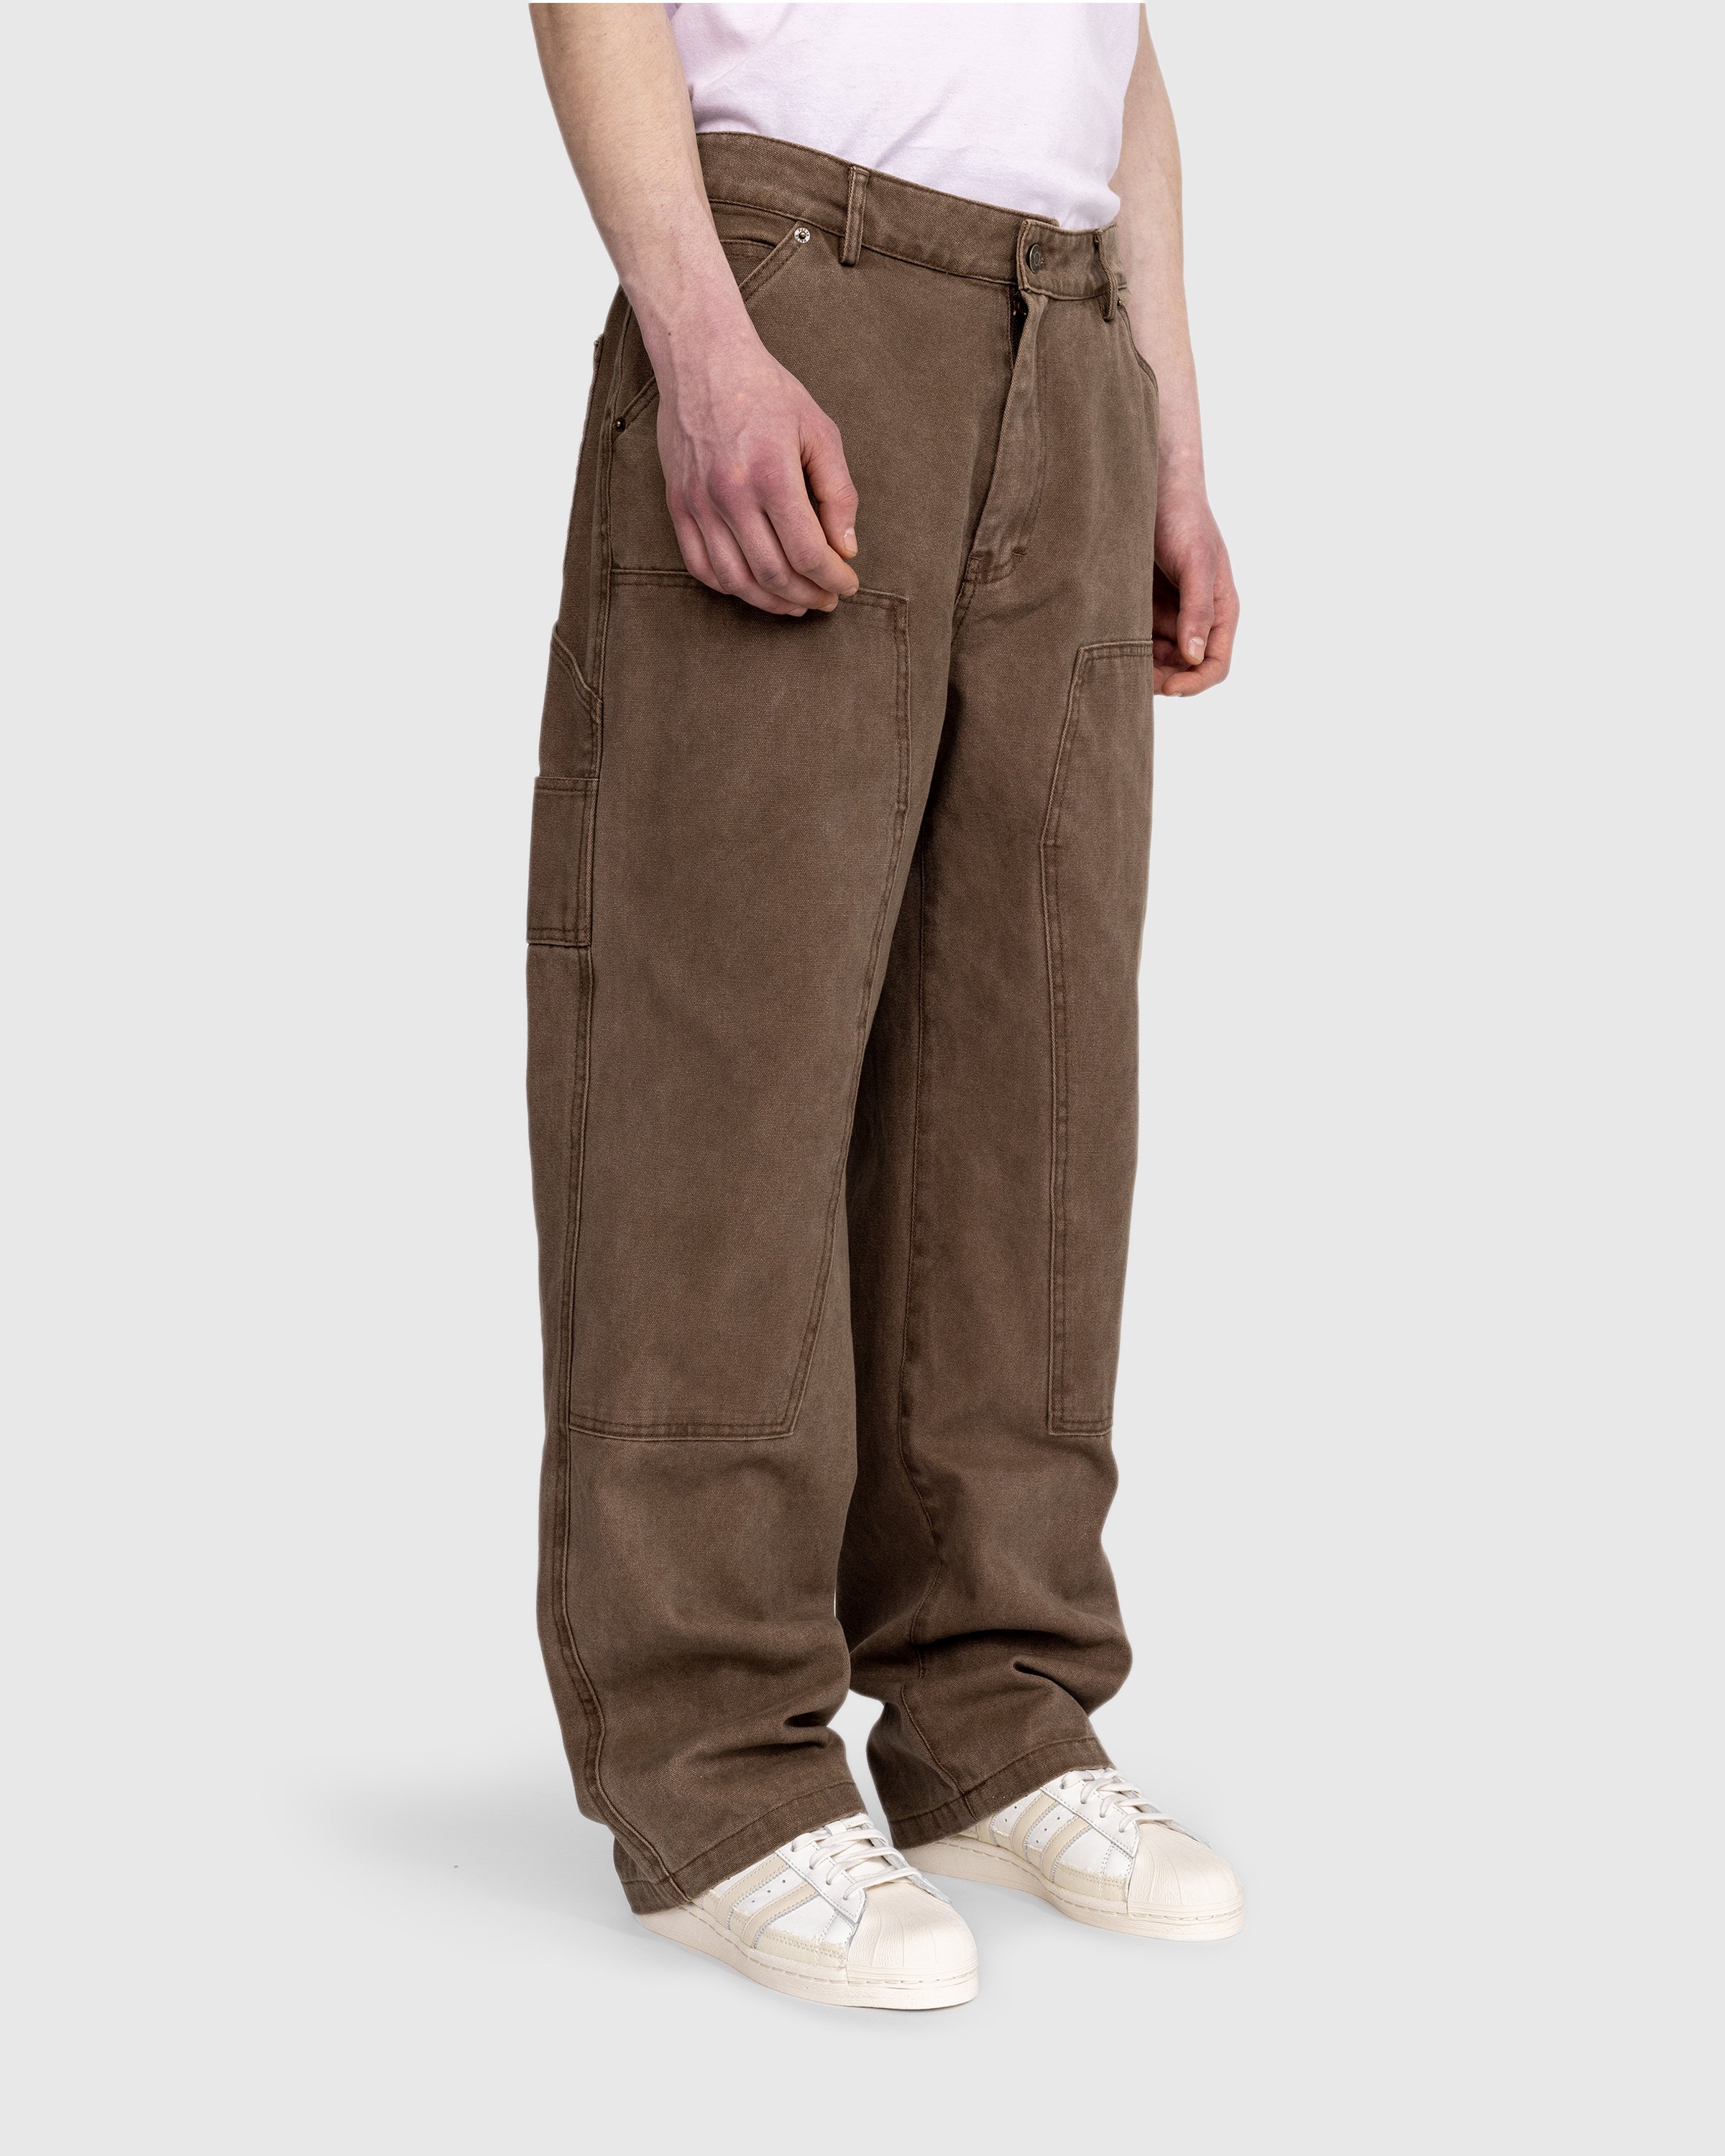 Patta - Canvas Painter Pants - Clothing - Brown - Image 4